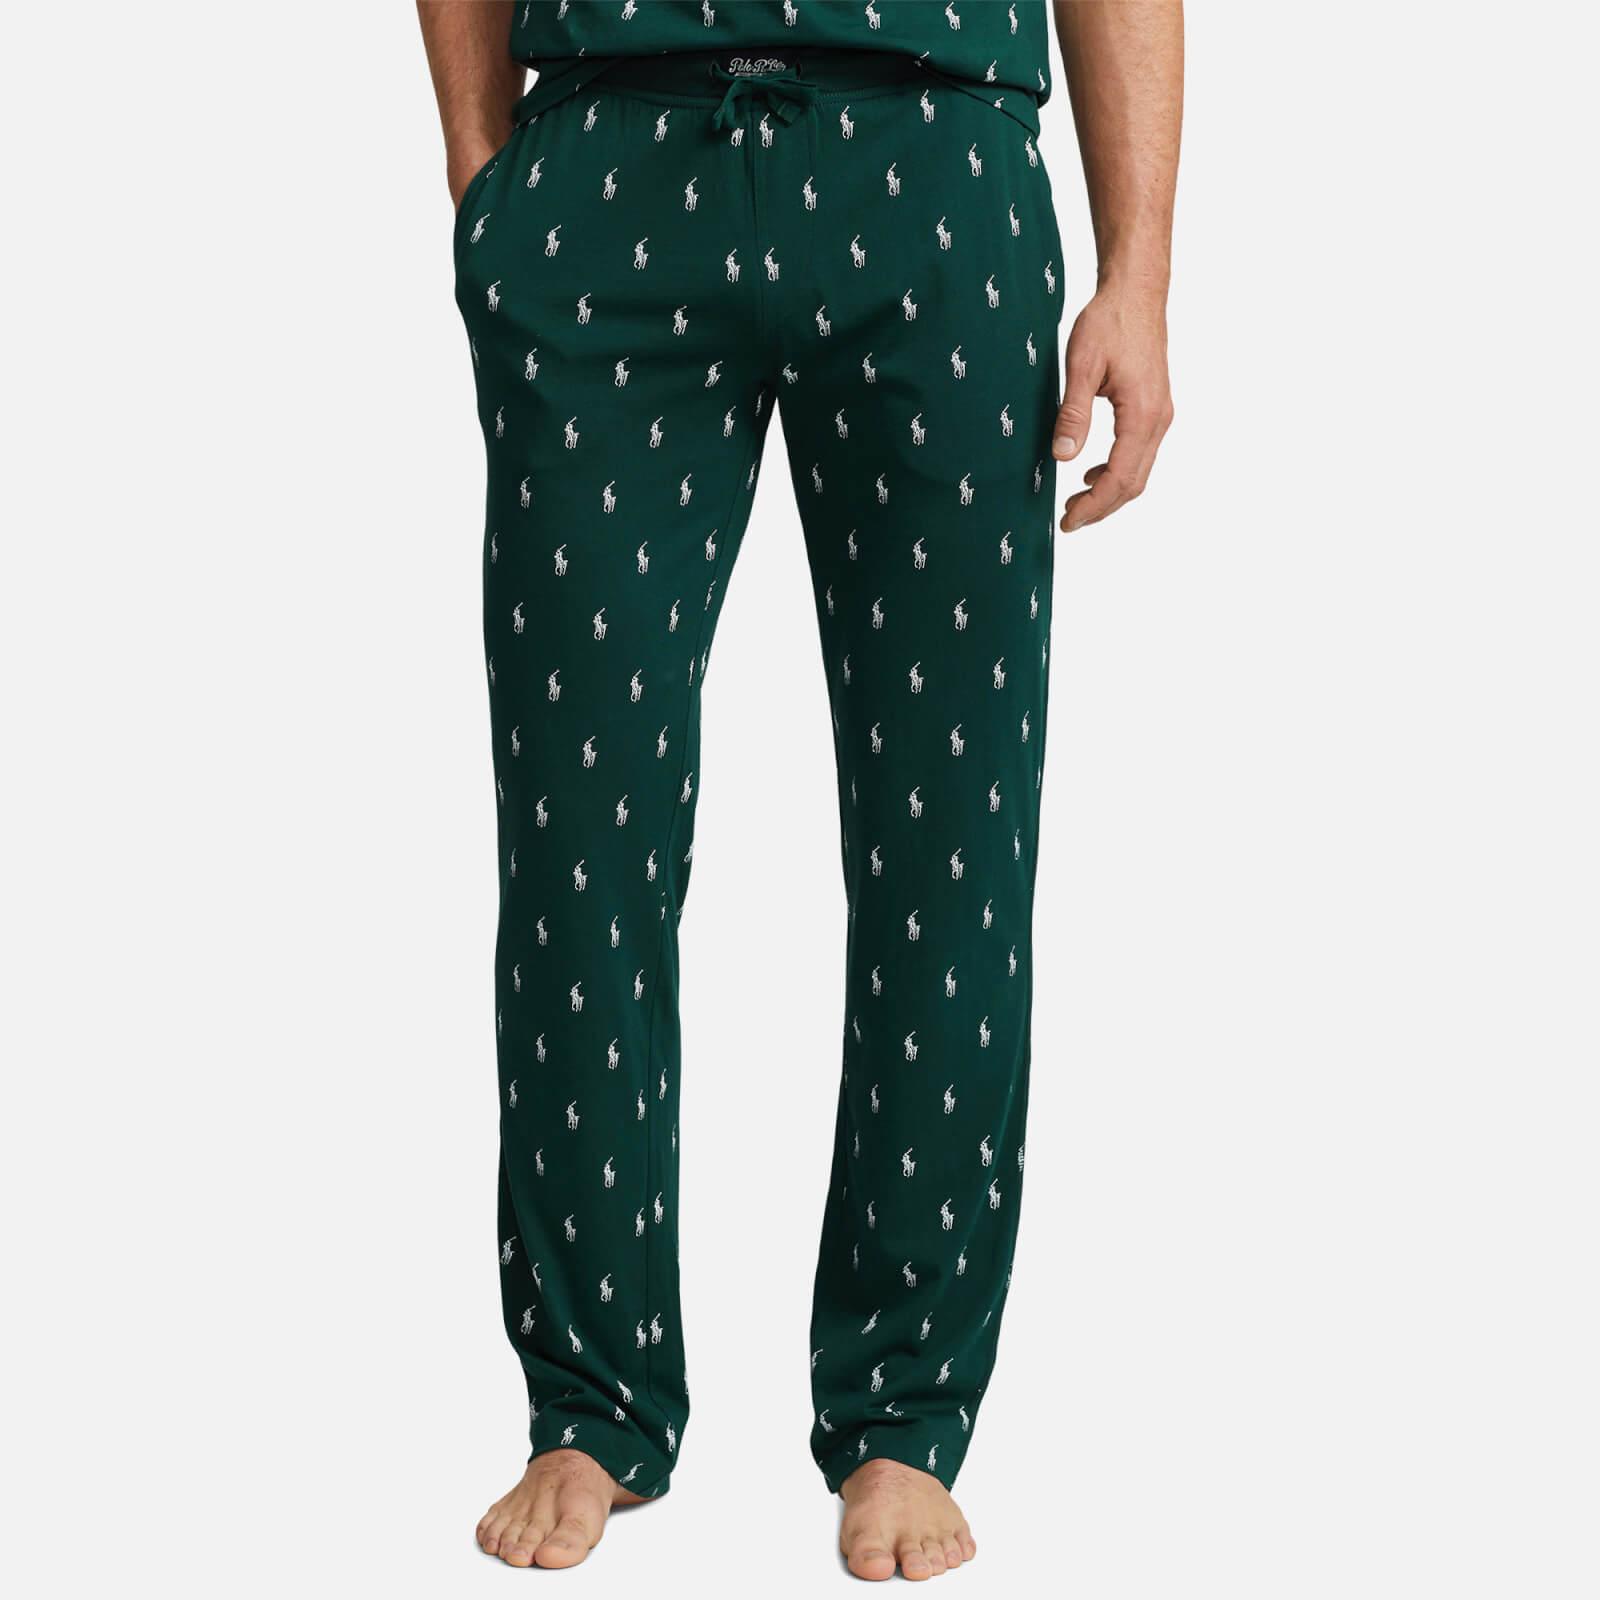 https://cdna.lystit.com/photos/thehut/08918c4c/polo-ralph-lauren-green-Cotton-Jersey-Pyjama-Trousers.jpeg